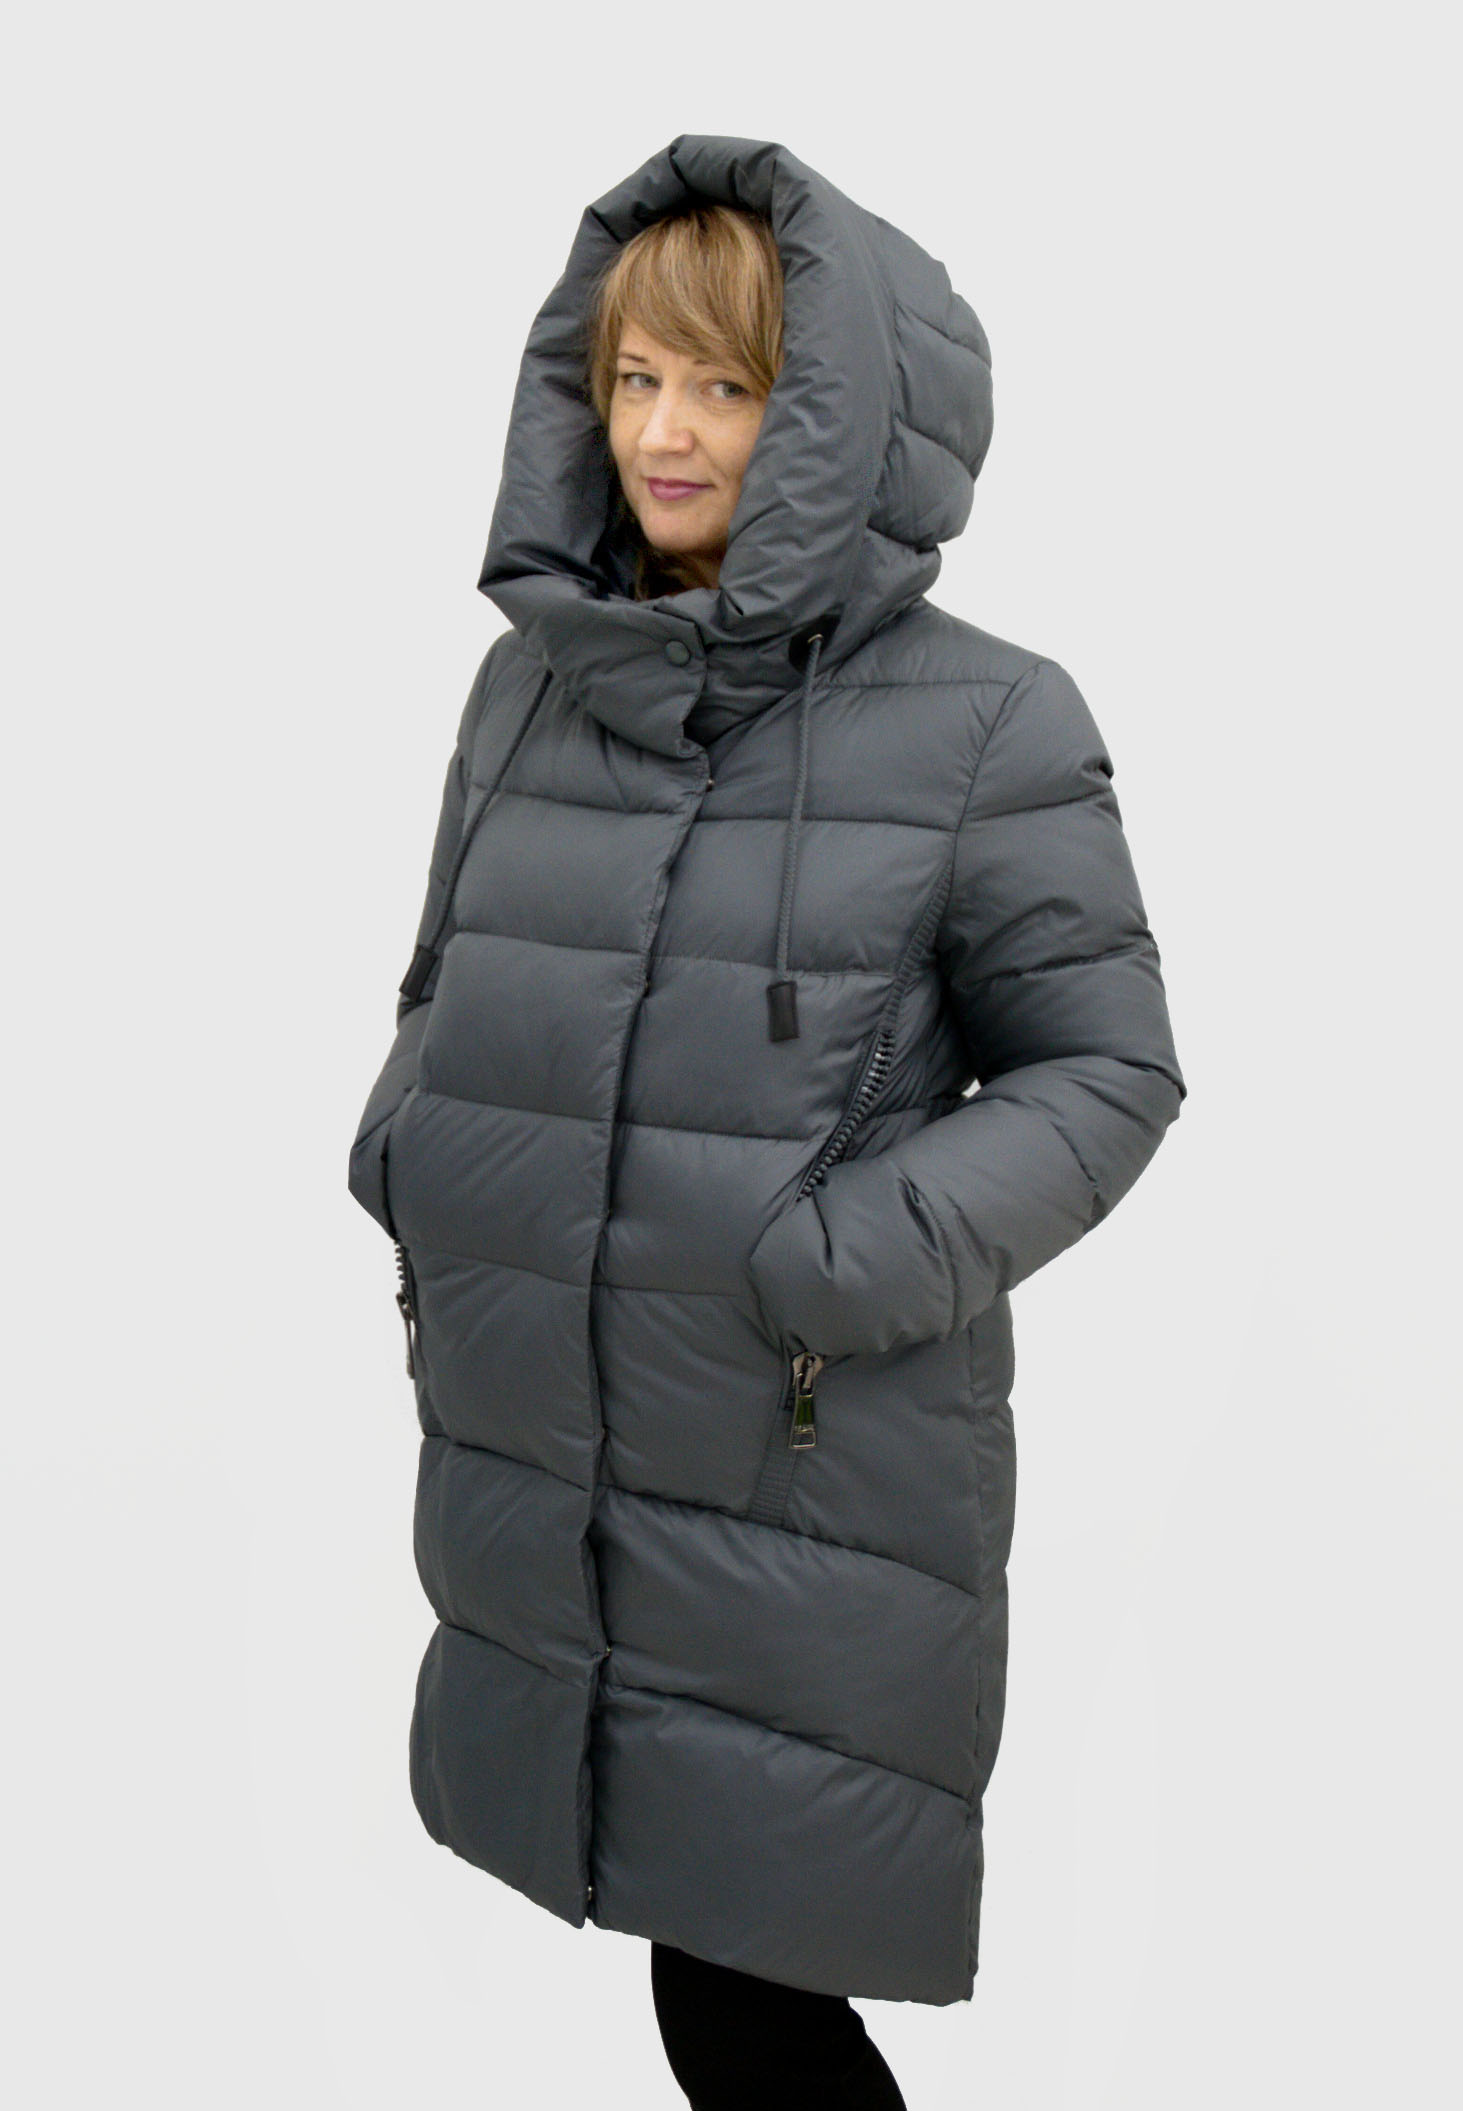 Зимняя женская куртка (MIEGOFCE)